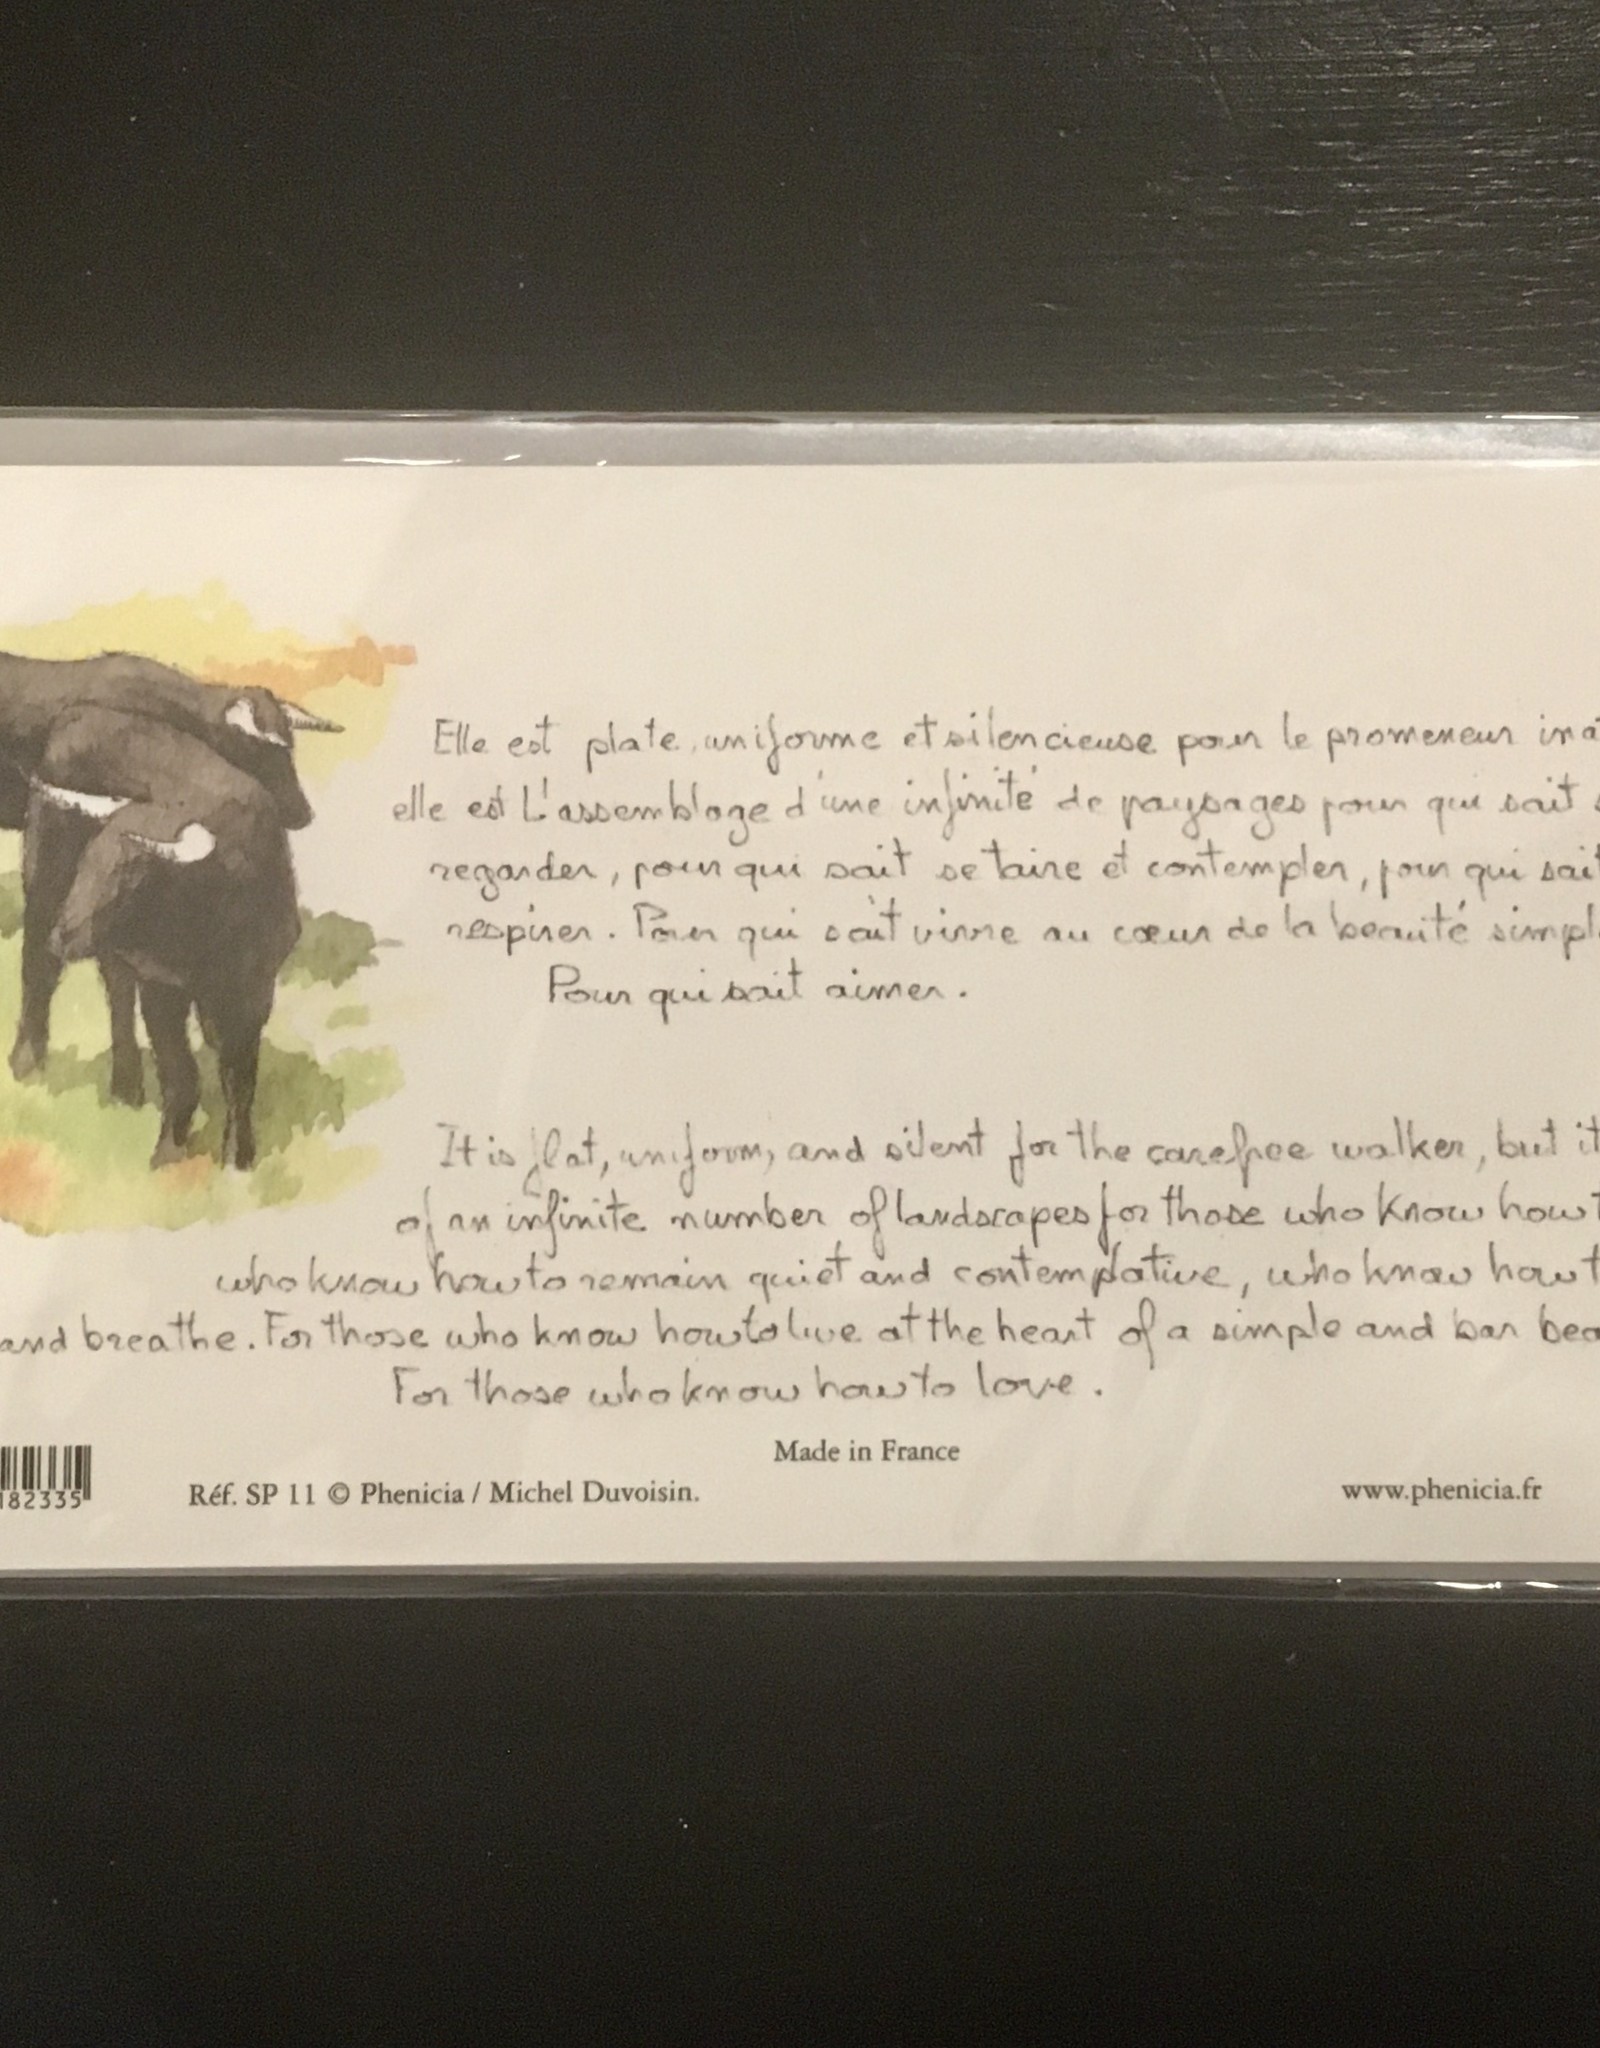 La Camargue Greeting Card - 8 1/4 x 4 1/4